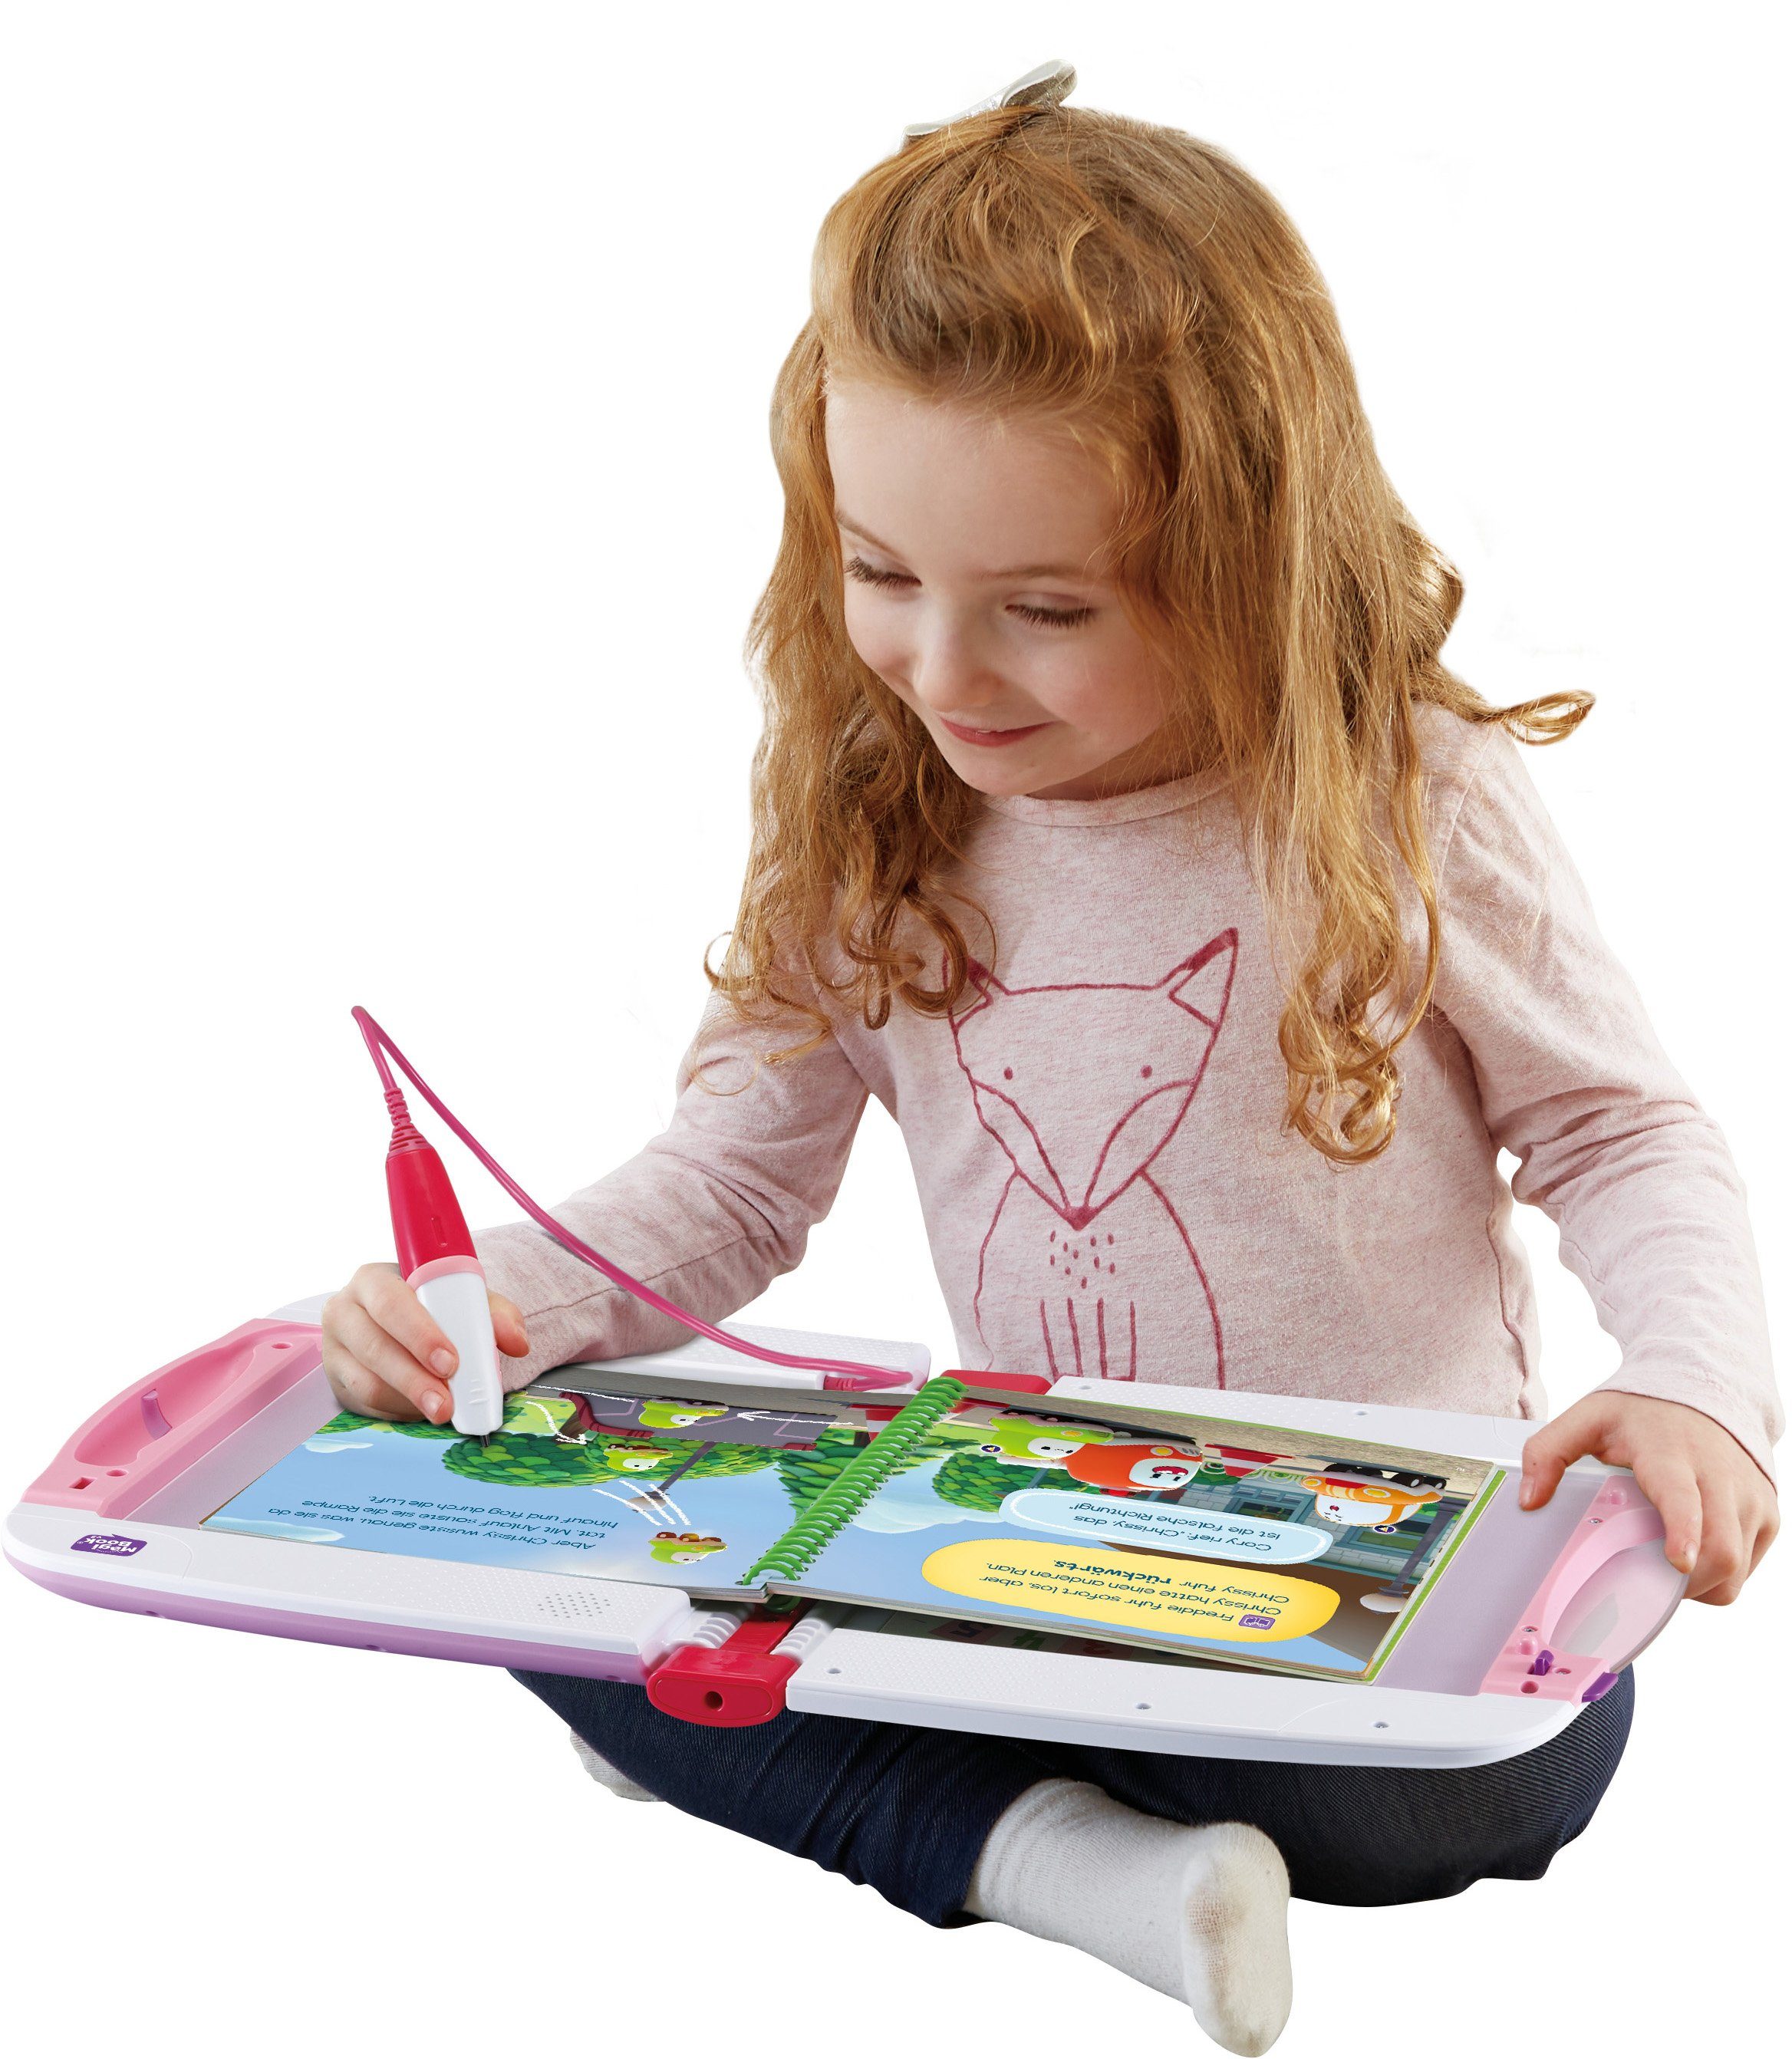 Vtech® Kindercomputer MagiBook v2, pink, 2 mit Interaktives Lernbuchsystem, Lernbüchern